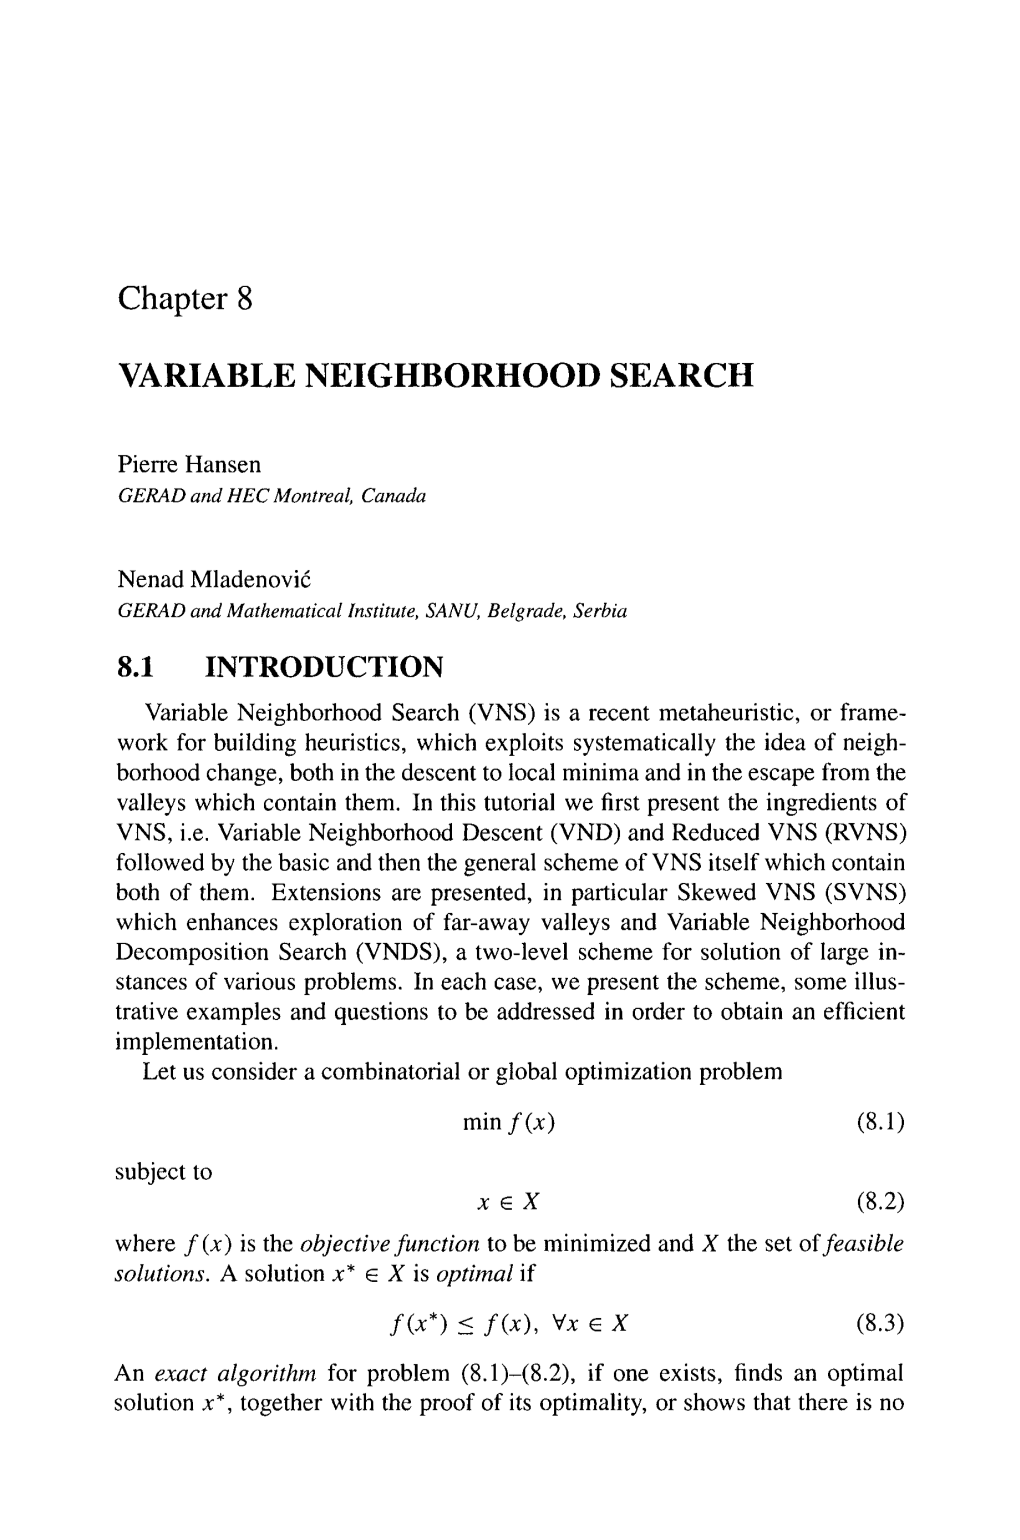 Chapter 8 VARIABLE NEIGHBORHOOD SEARCH